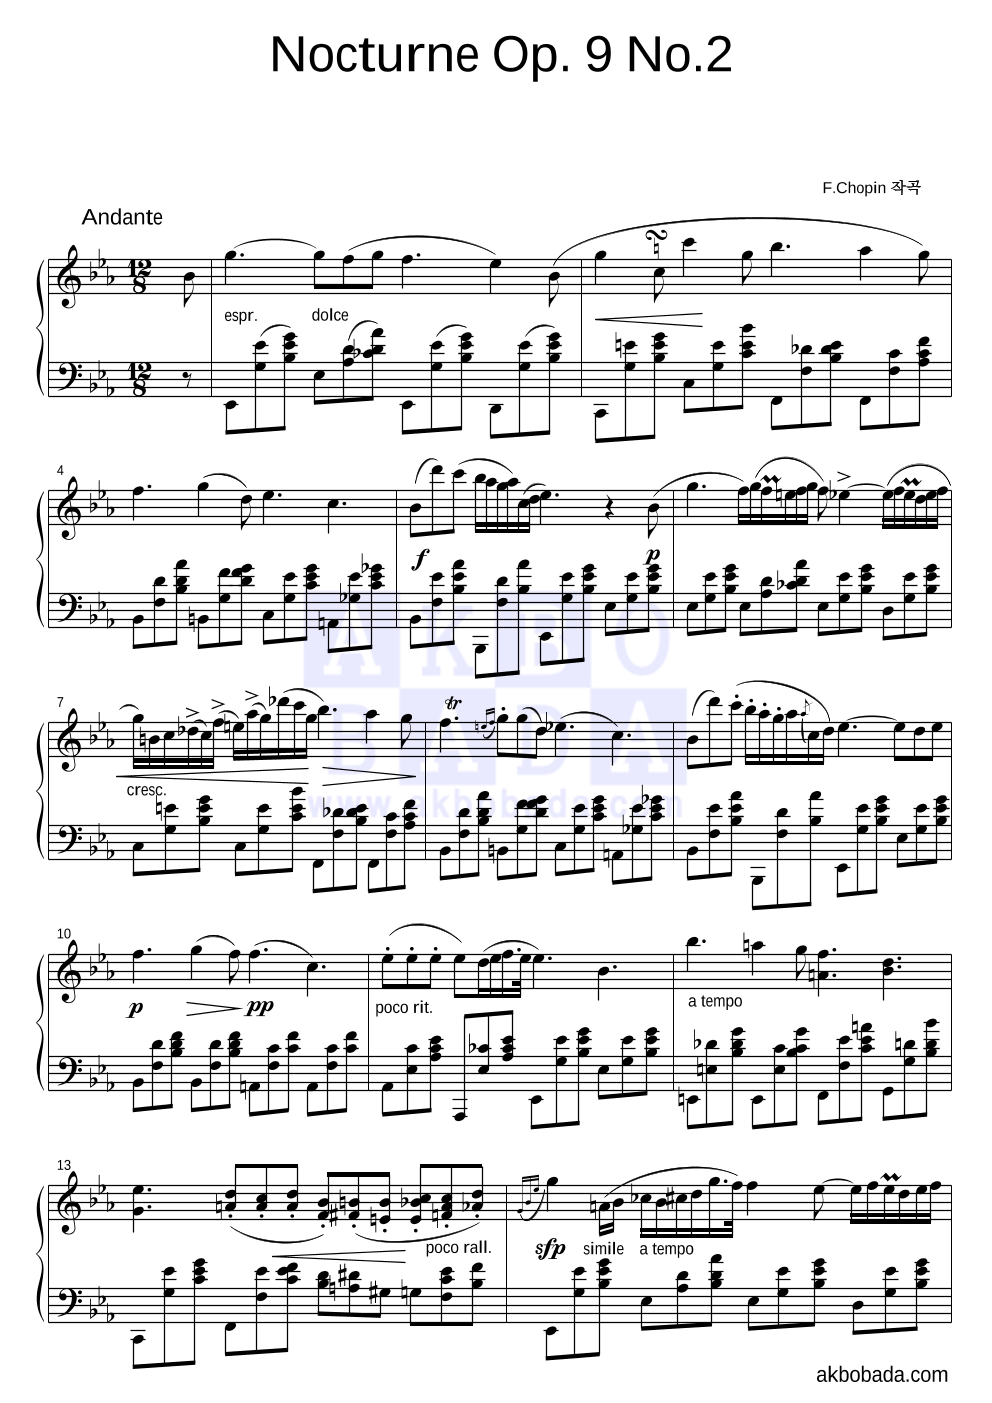 nocturne no. 2 in e-flat major, op. 9, no. 2